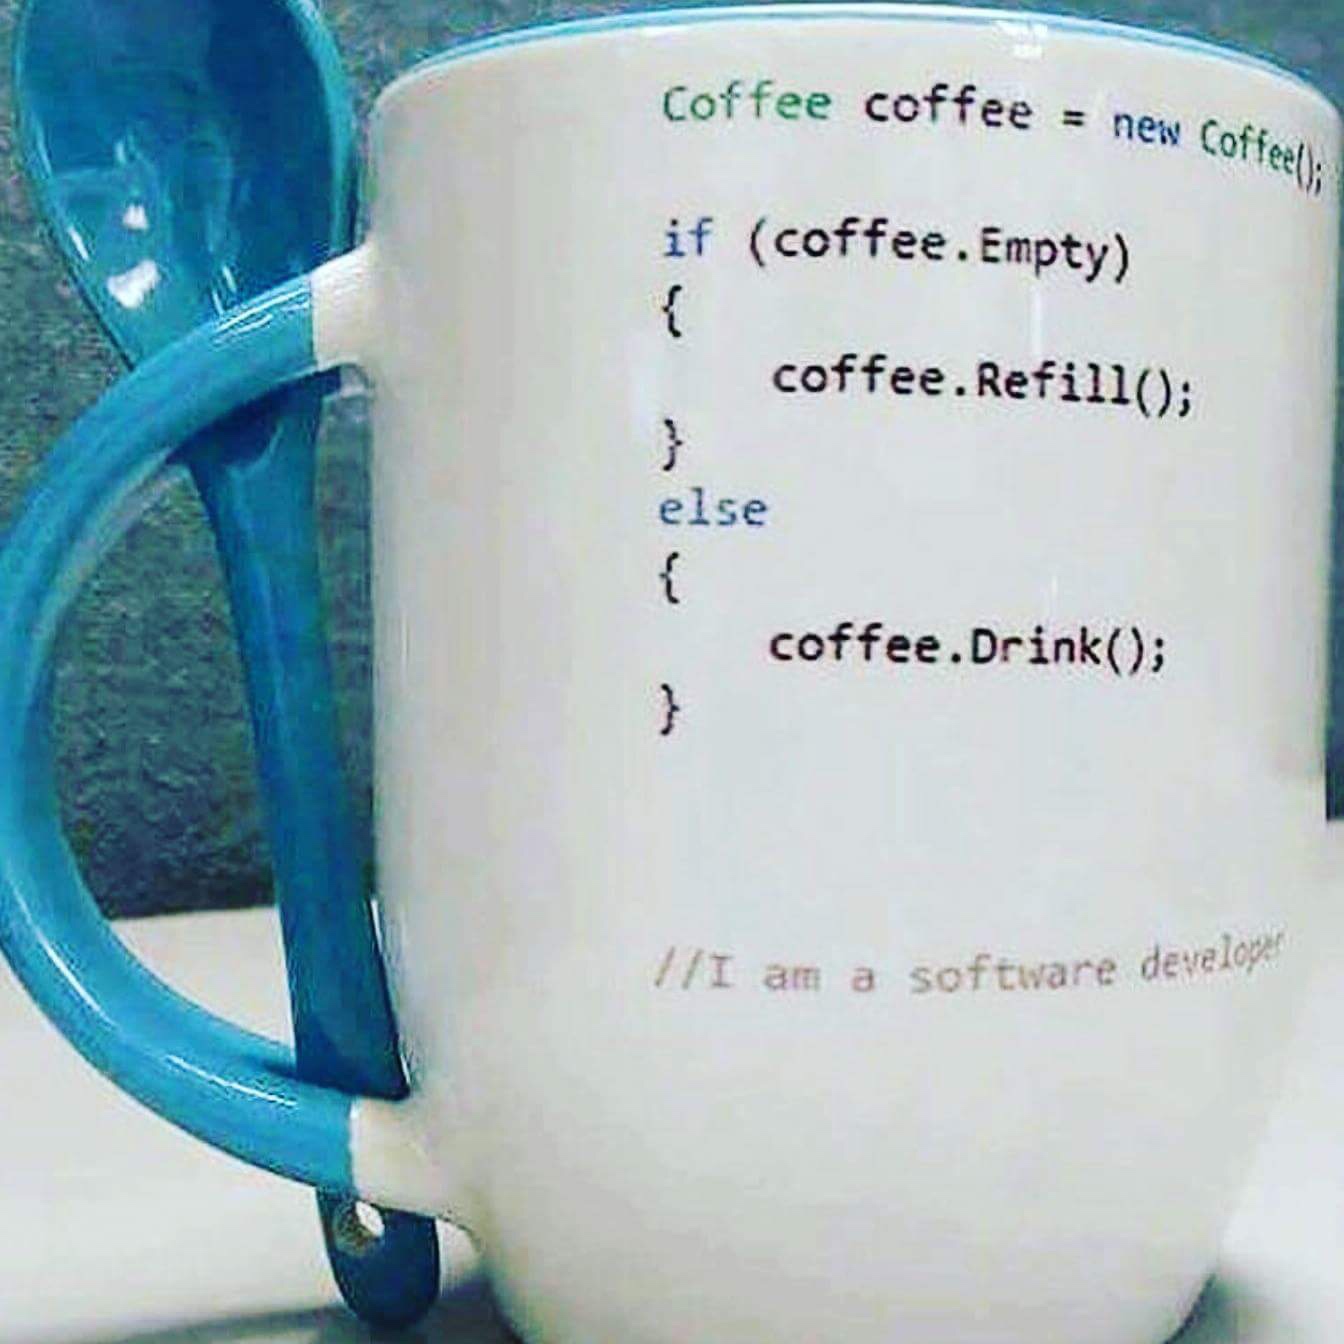 dank meme - coding coffee mug - Coffee coffee new Coffeel. if coffee. Empty coffee. Refill; else coffee.Drink; I am a software developer